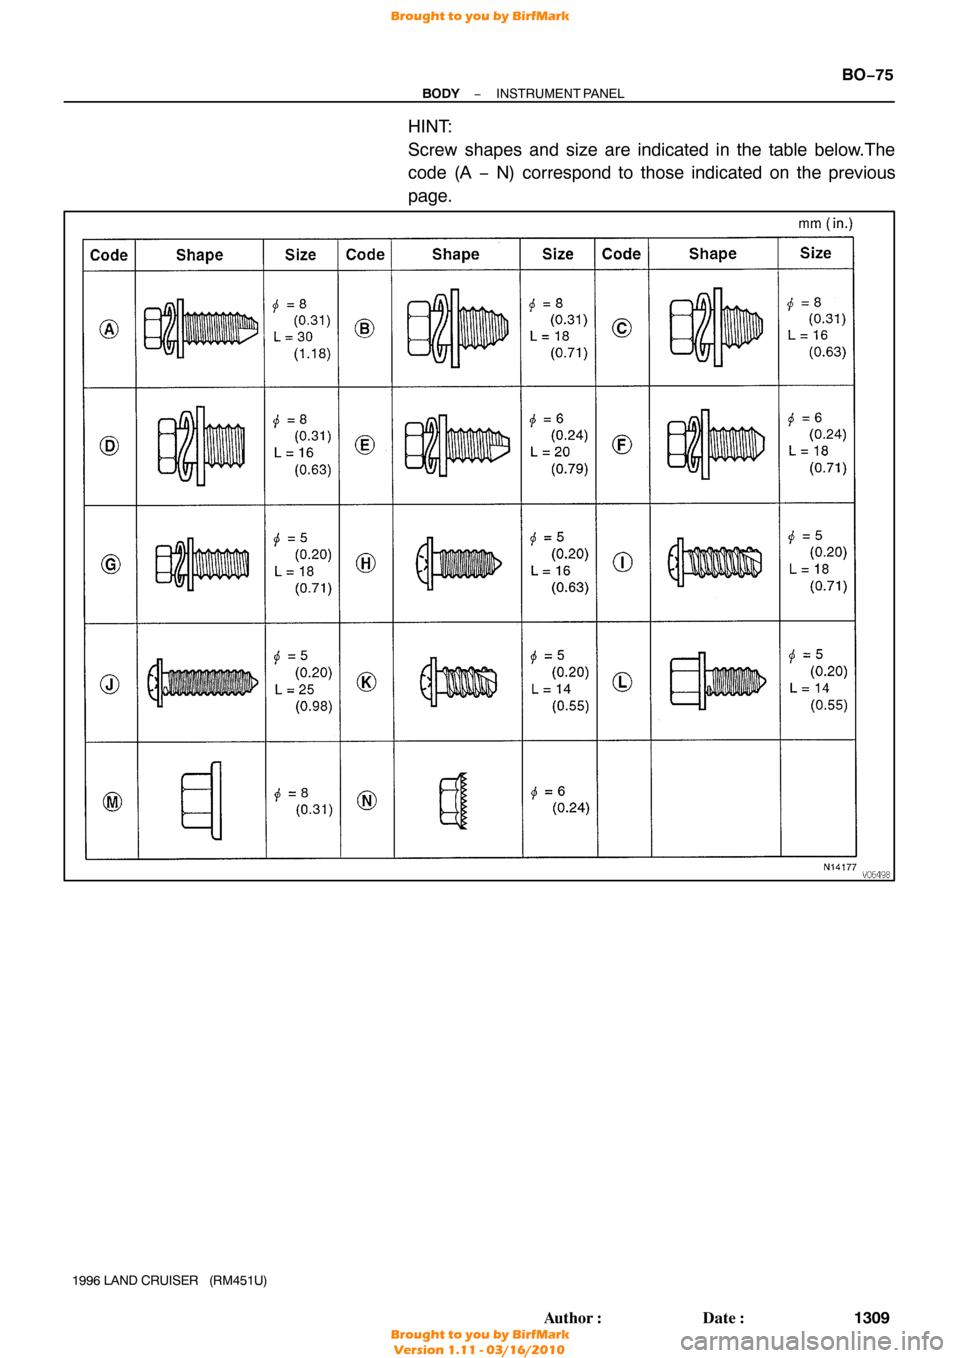 TOYOTA LAND CRUISER 1996 J80 Workshop Manual −
BODY INSTRUMENT PANEL
BO−75
1309
Author: Date:
1996 LAND CRUISER   (RM451U)
HINT:
Screw shapes and size are indicated in the table below.The
code (A − N) correspond to those indicated on the